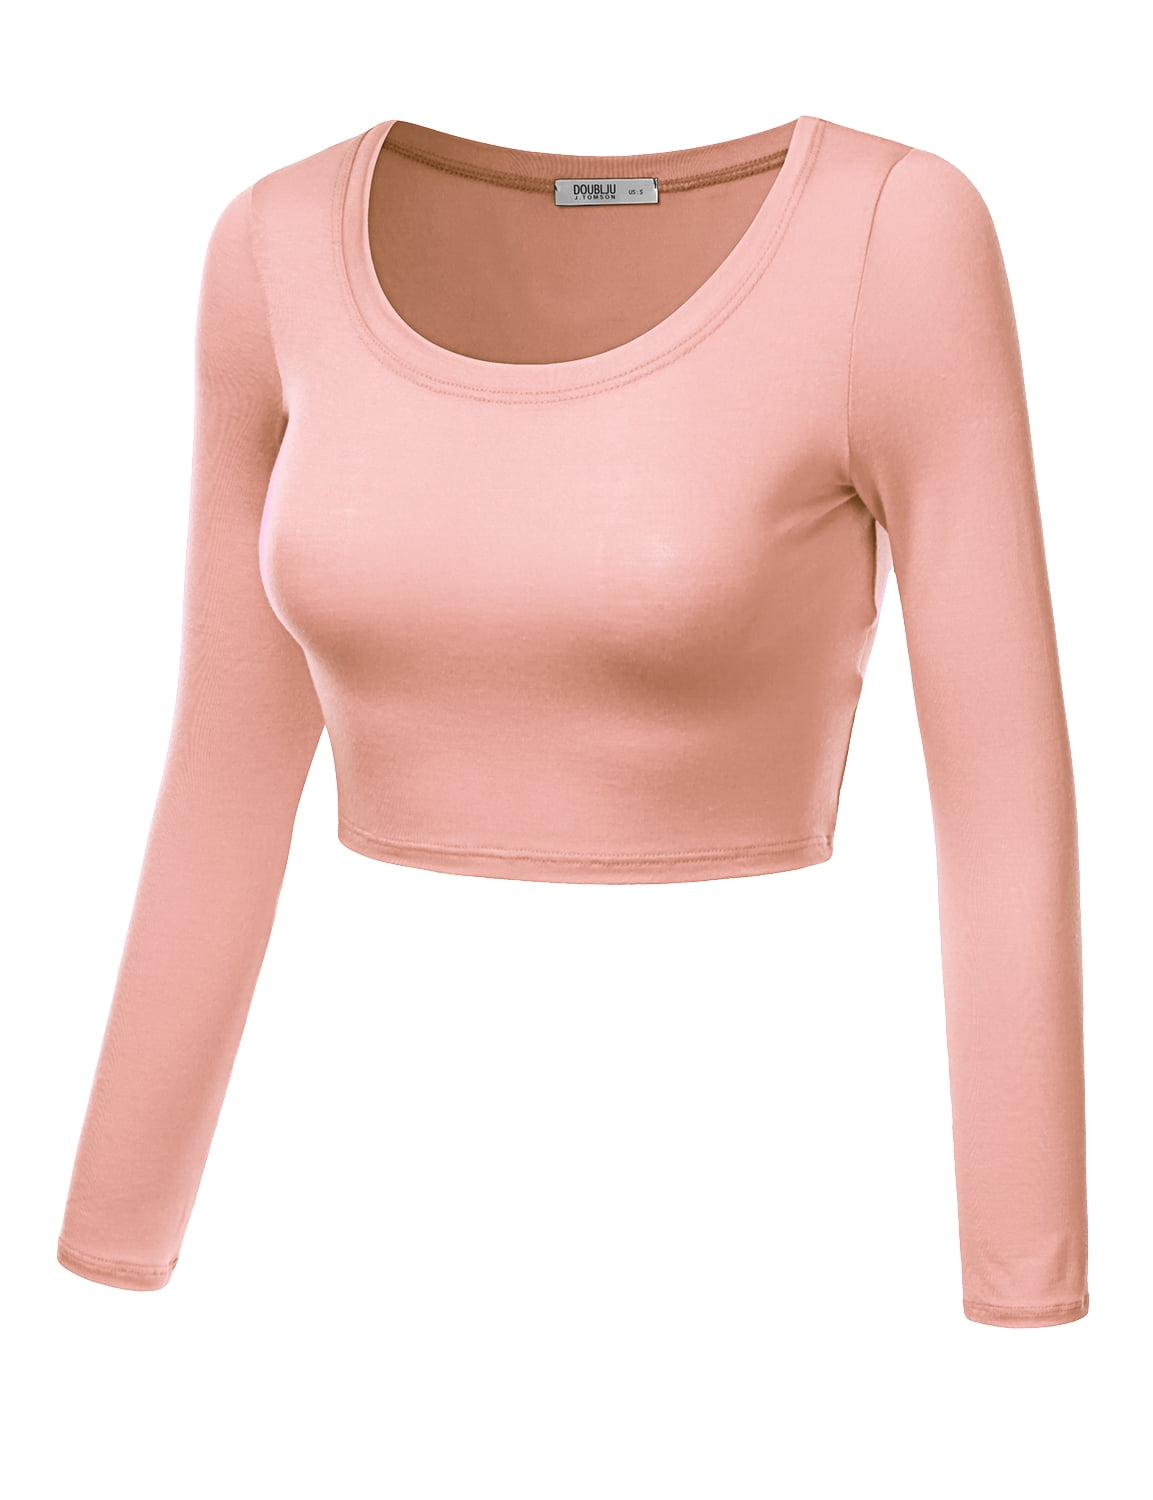 Women's Crop Tops Basic Stretchy Scoop Neck Long Sleeve T-Shirt LIGHTPINK  XL 